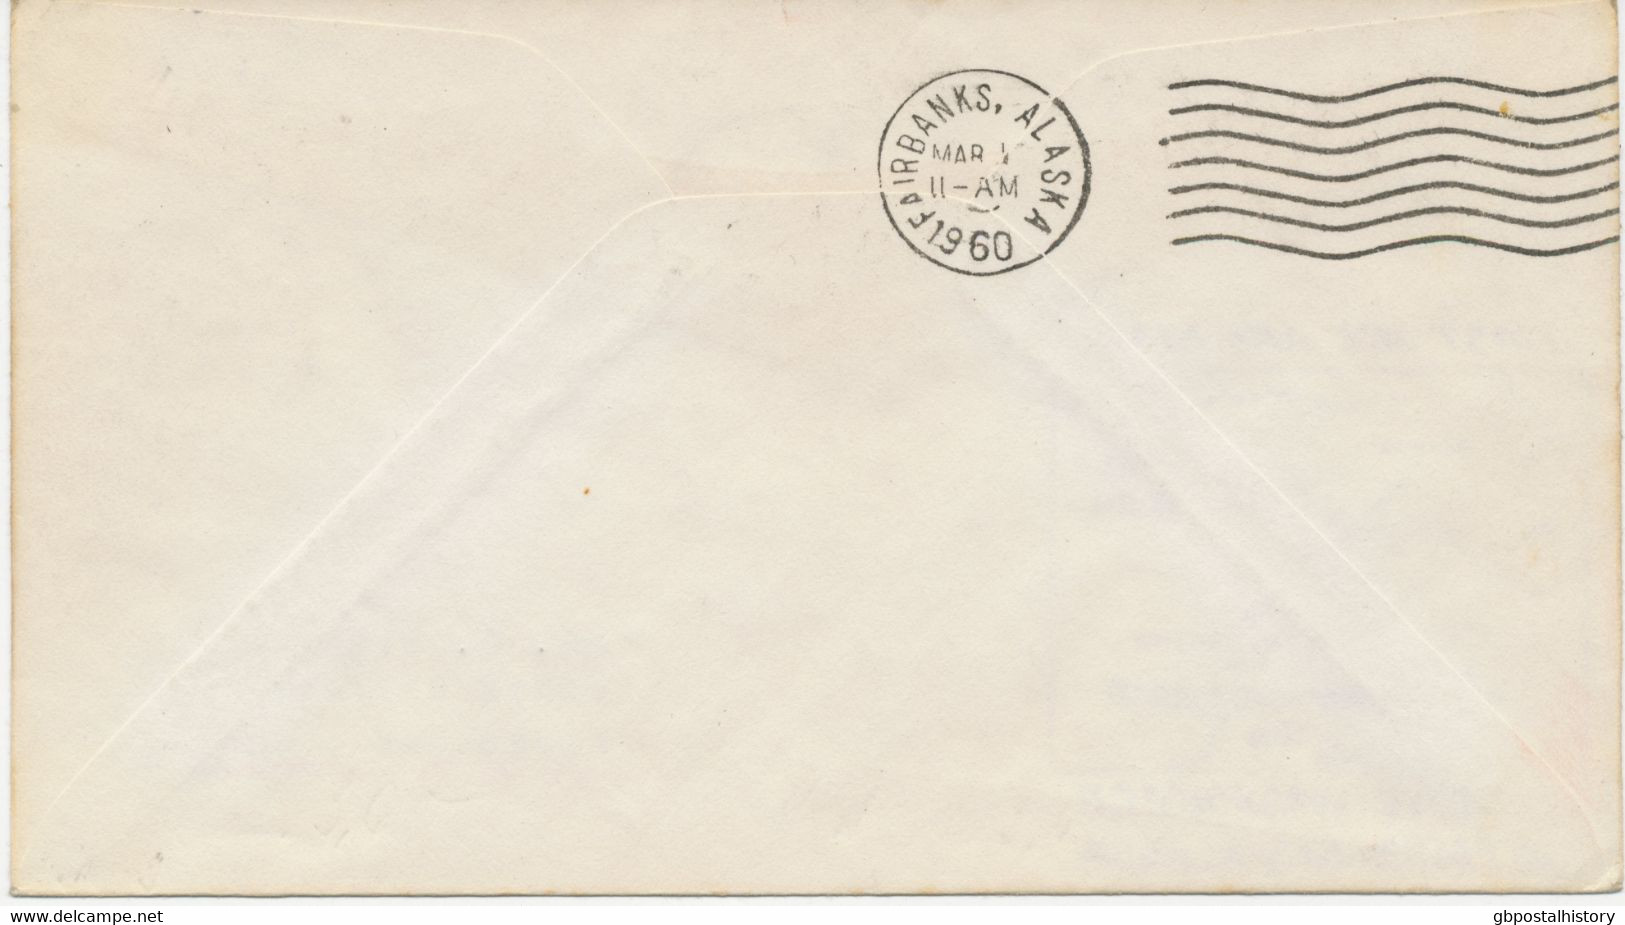 USA 1960 Selt. Kab.-Erstflug A.M. 20 - First Jet Air Mail Service - "Seattle, Washington - Fairbanks, Alaska" - 2c. 1941-1960 Storia Postale